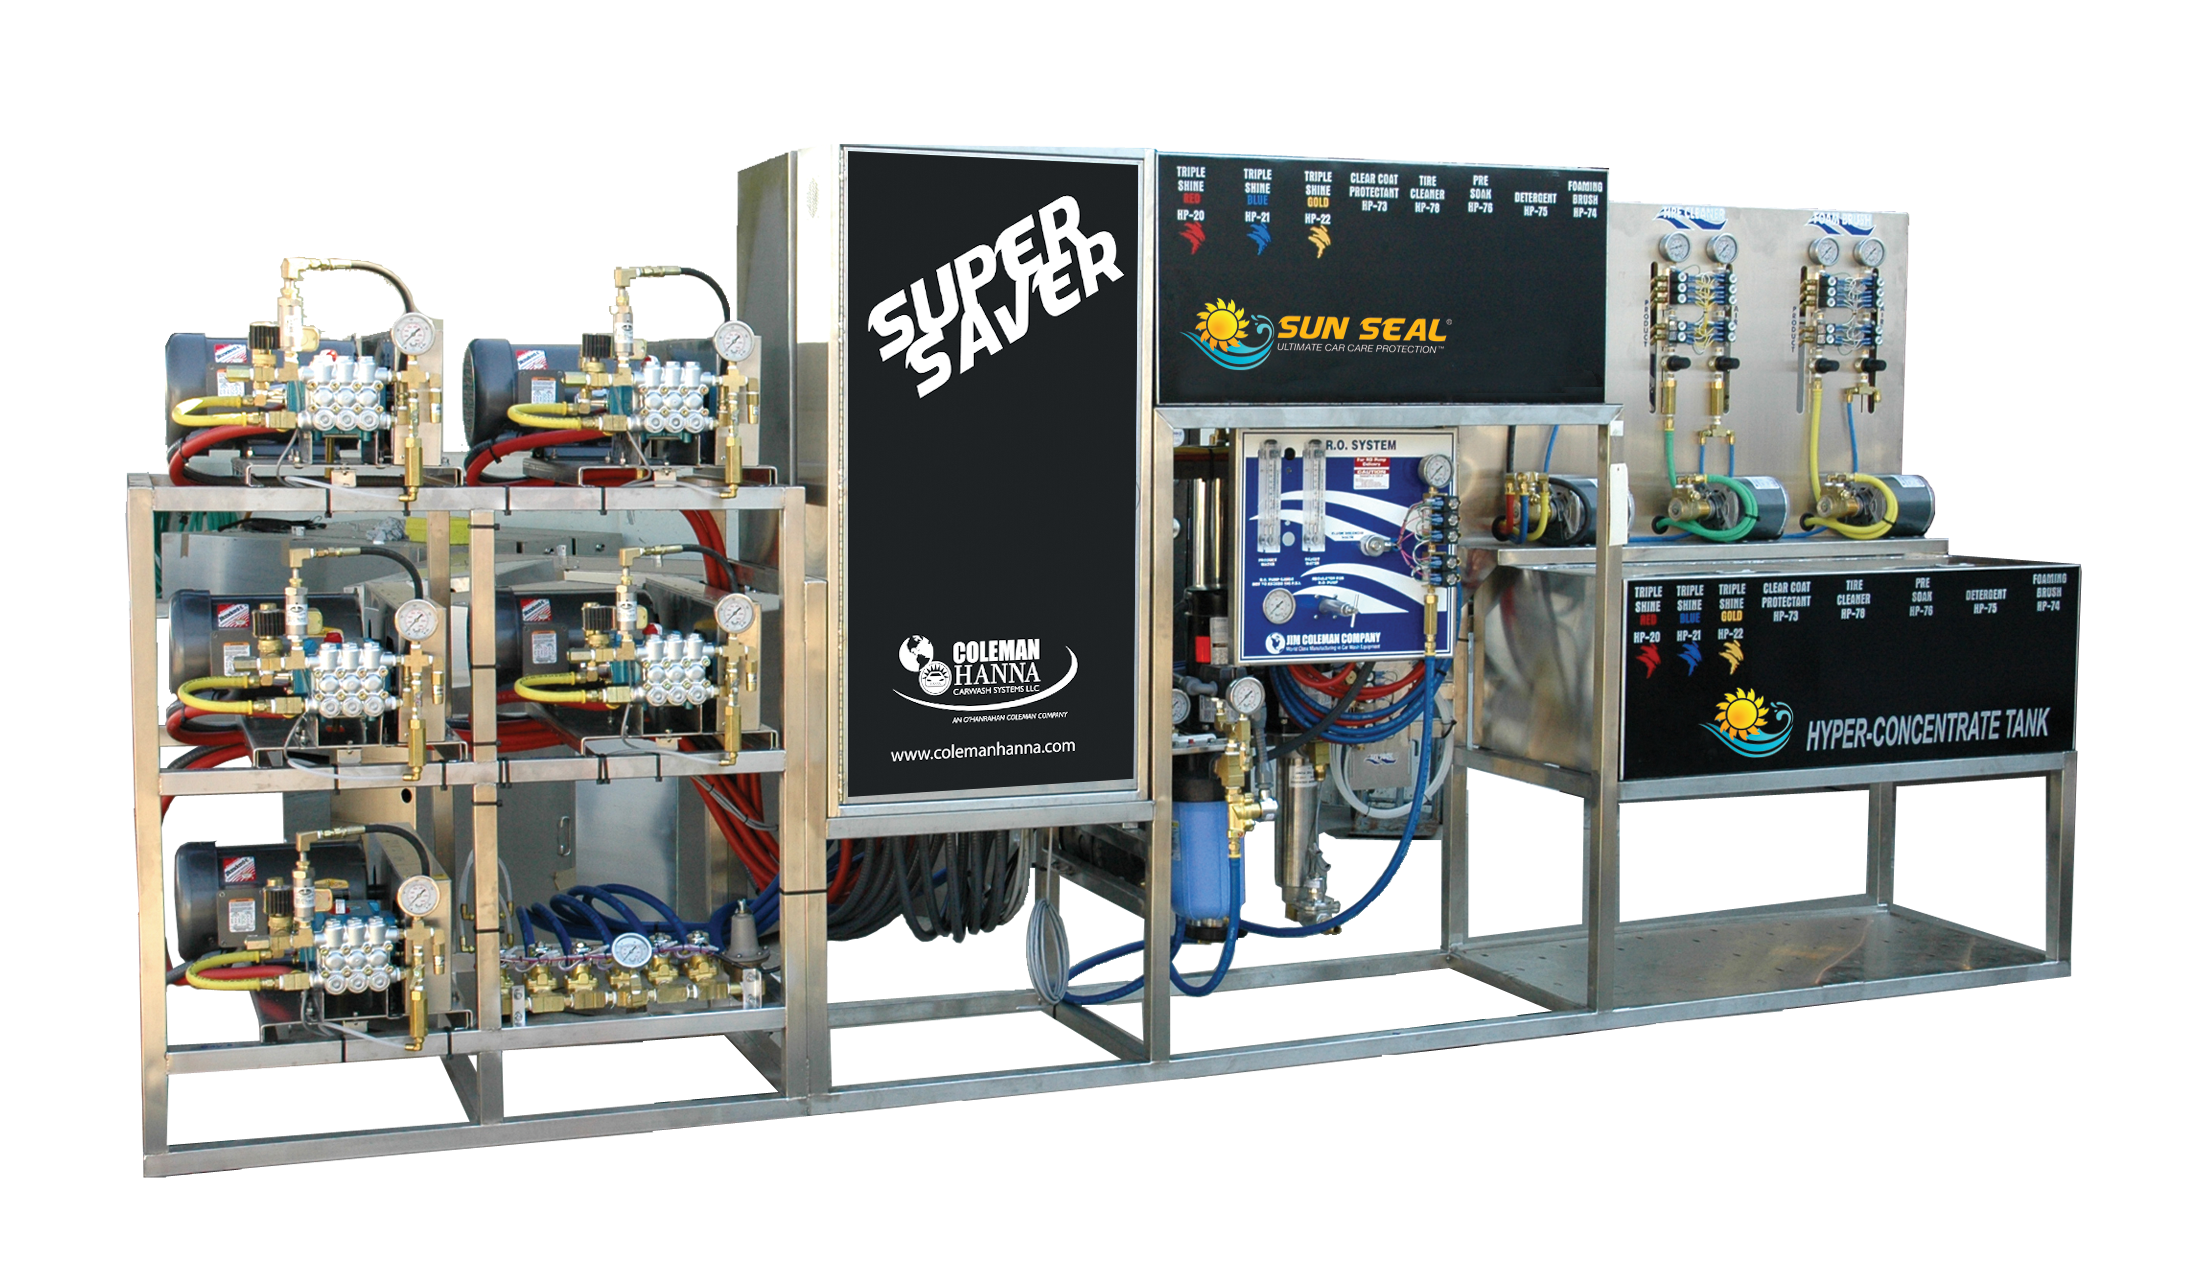 Super Saver Self Serve Pumping Equipment